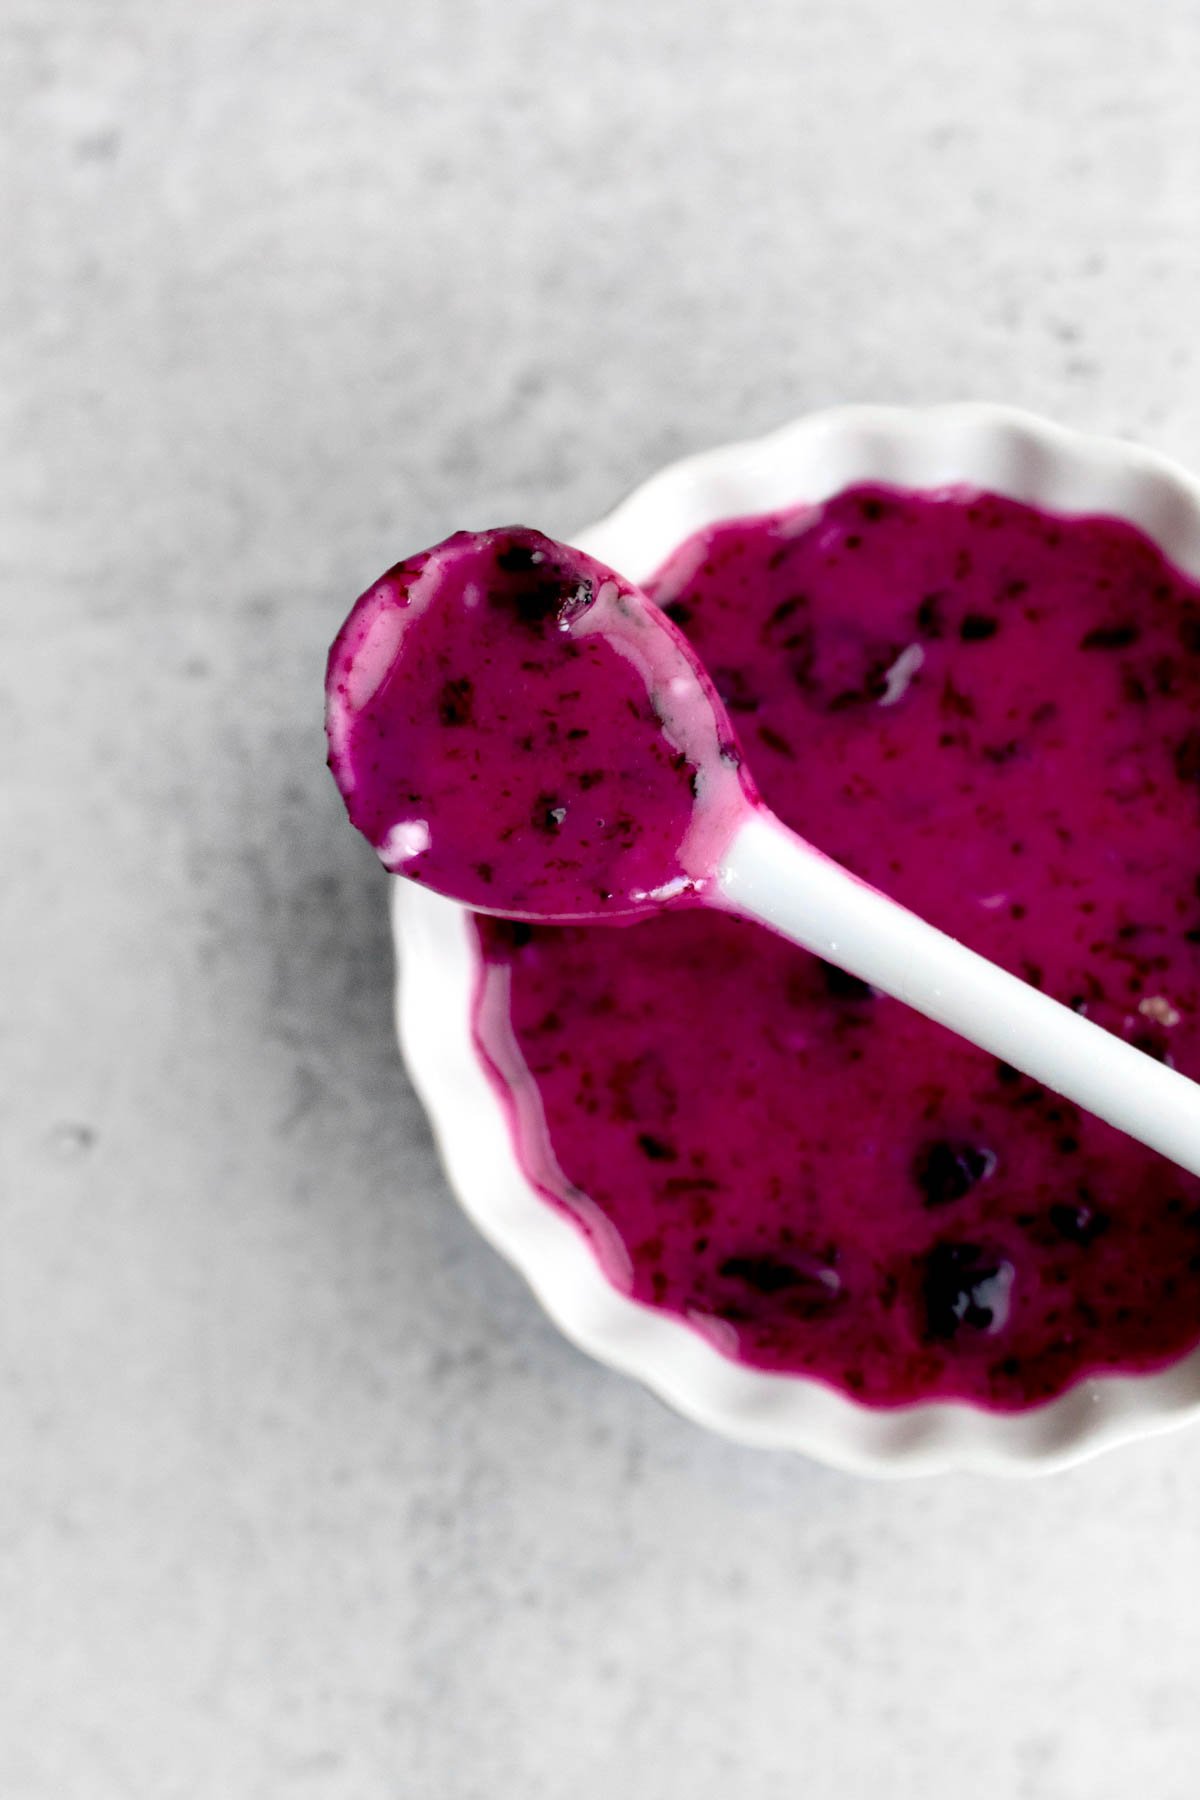 Hot pink blueberry glaze in a ramekin with a white spoon.